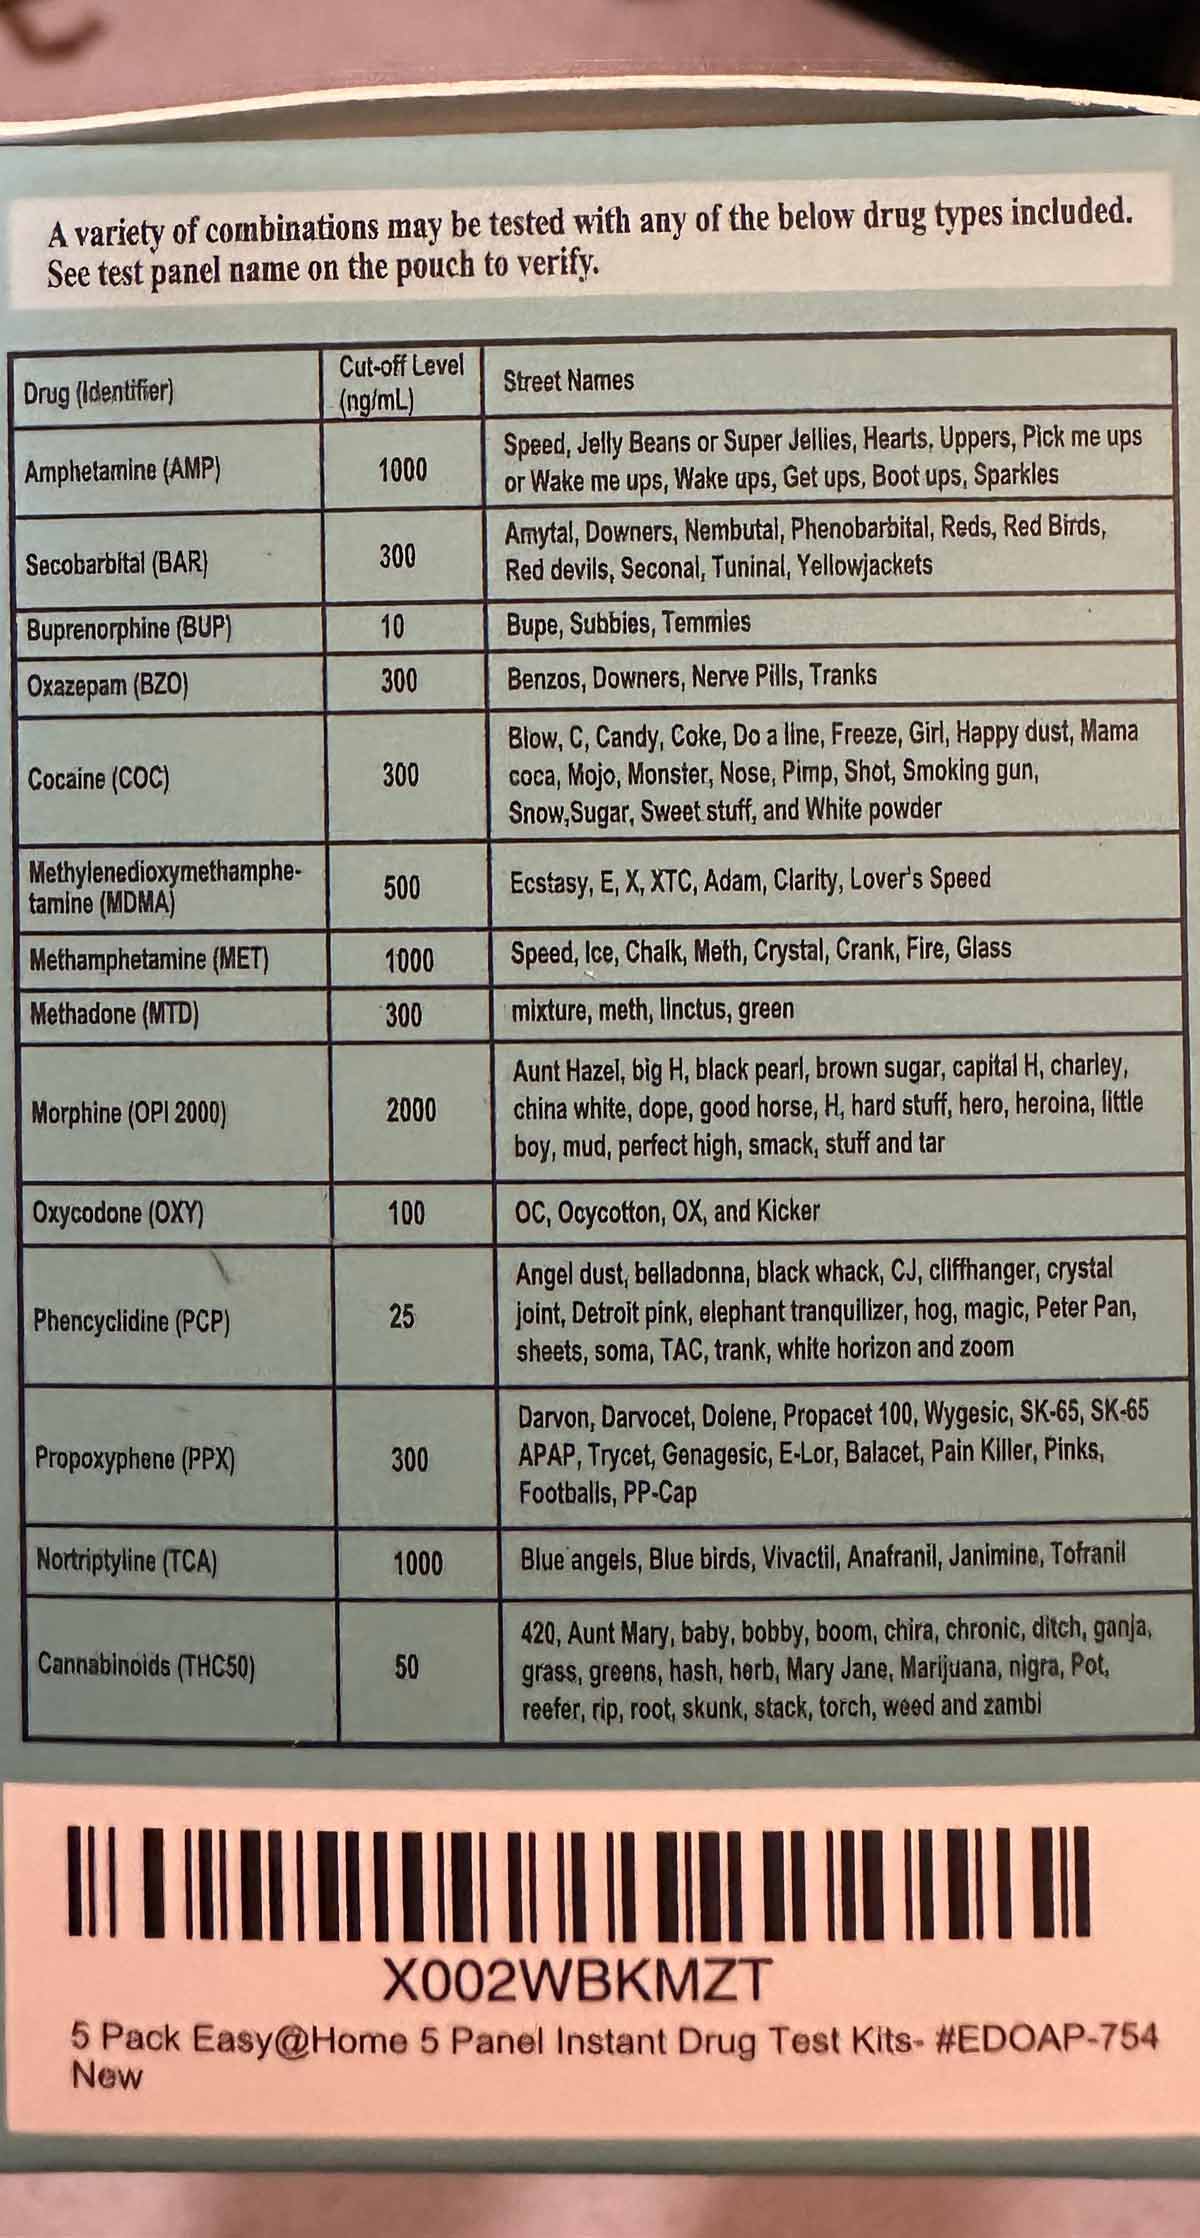 The list of “street names” for drugs on this drug testing kit